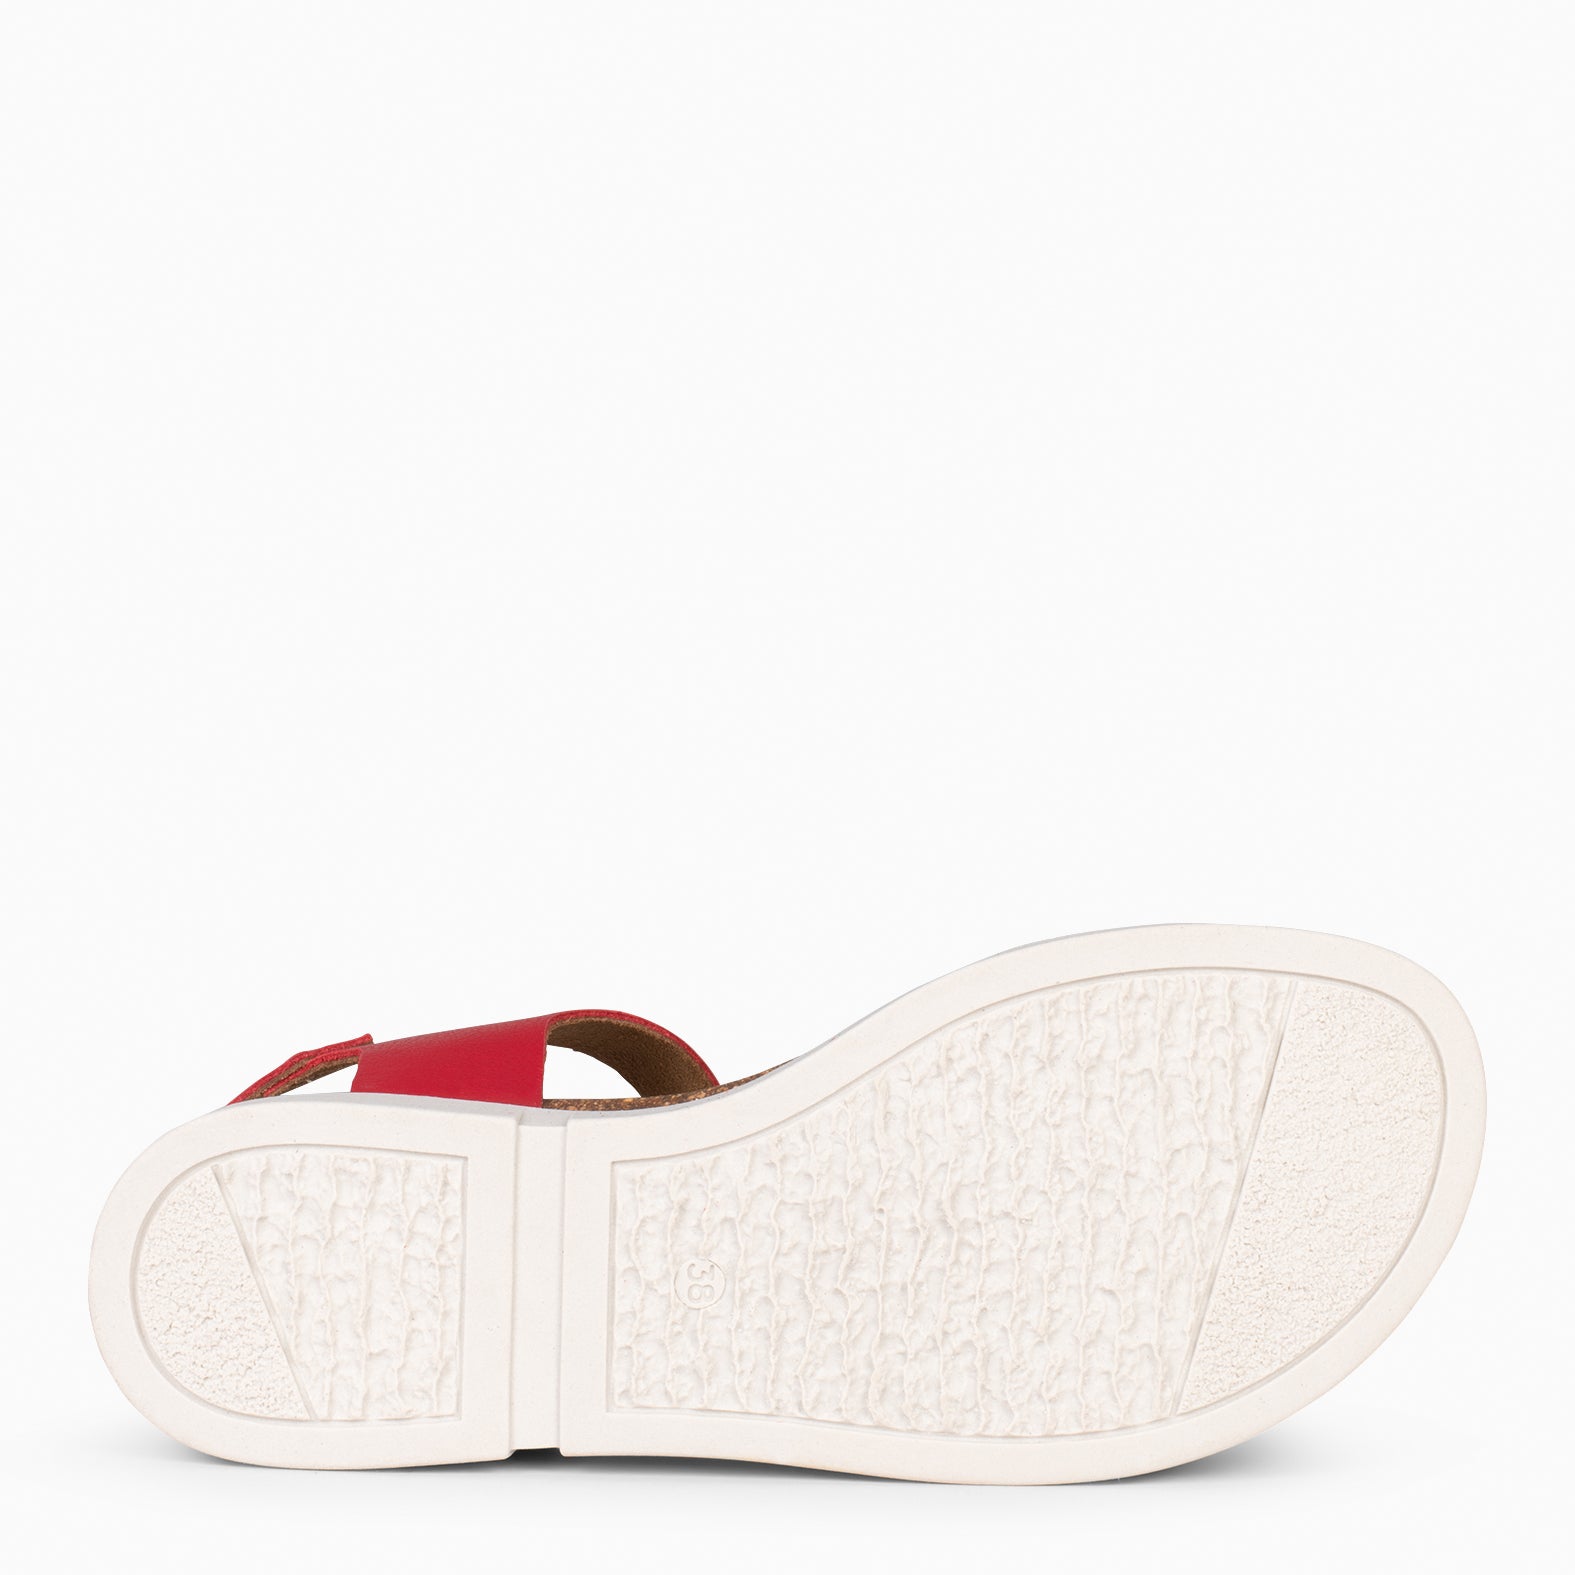 ARALIA – RED comfortable flat sandal